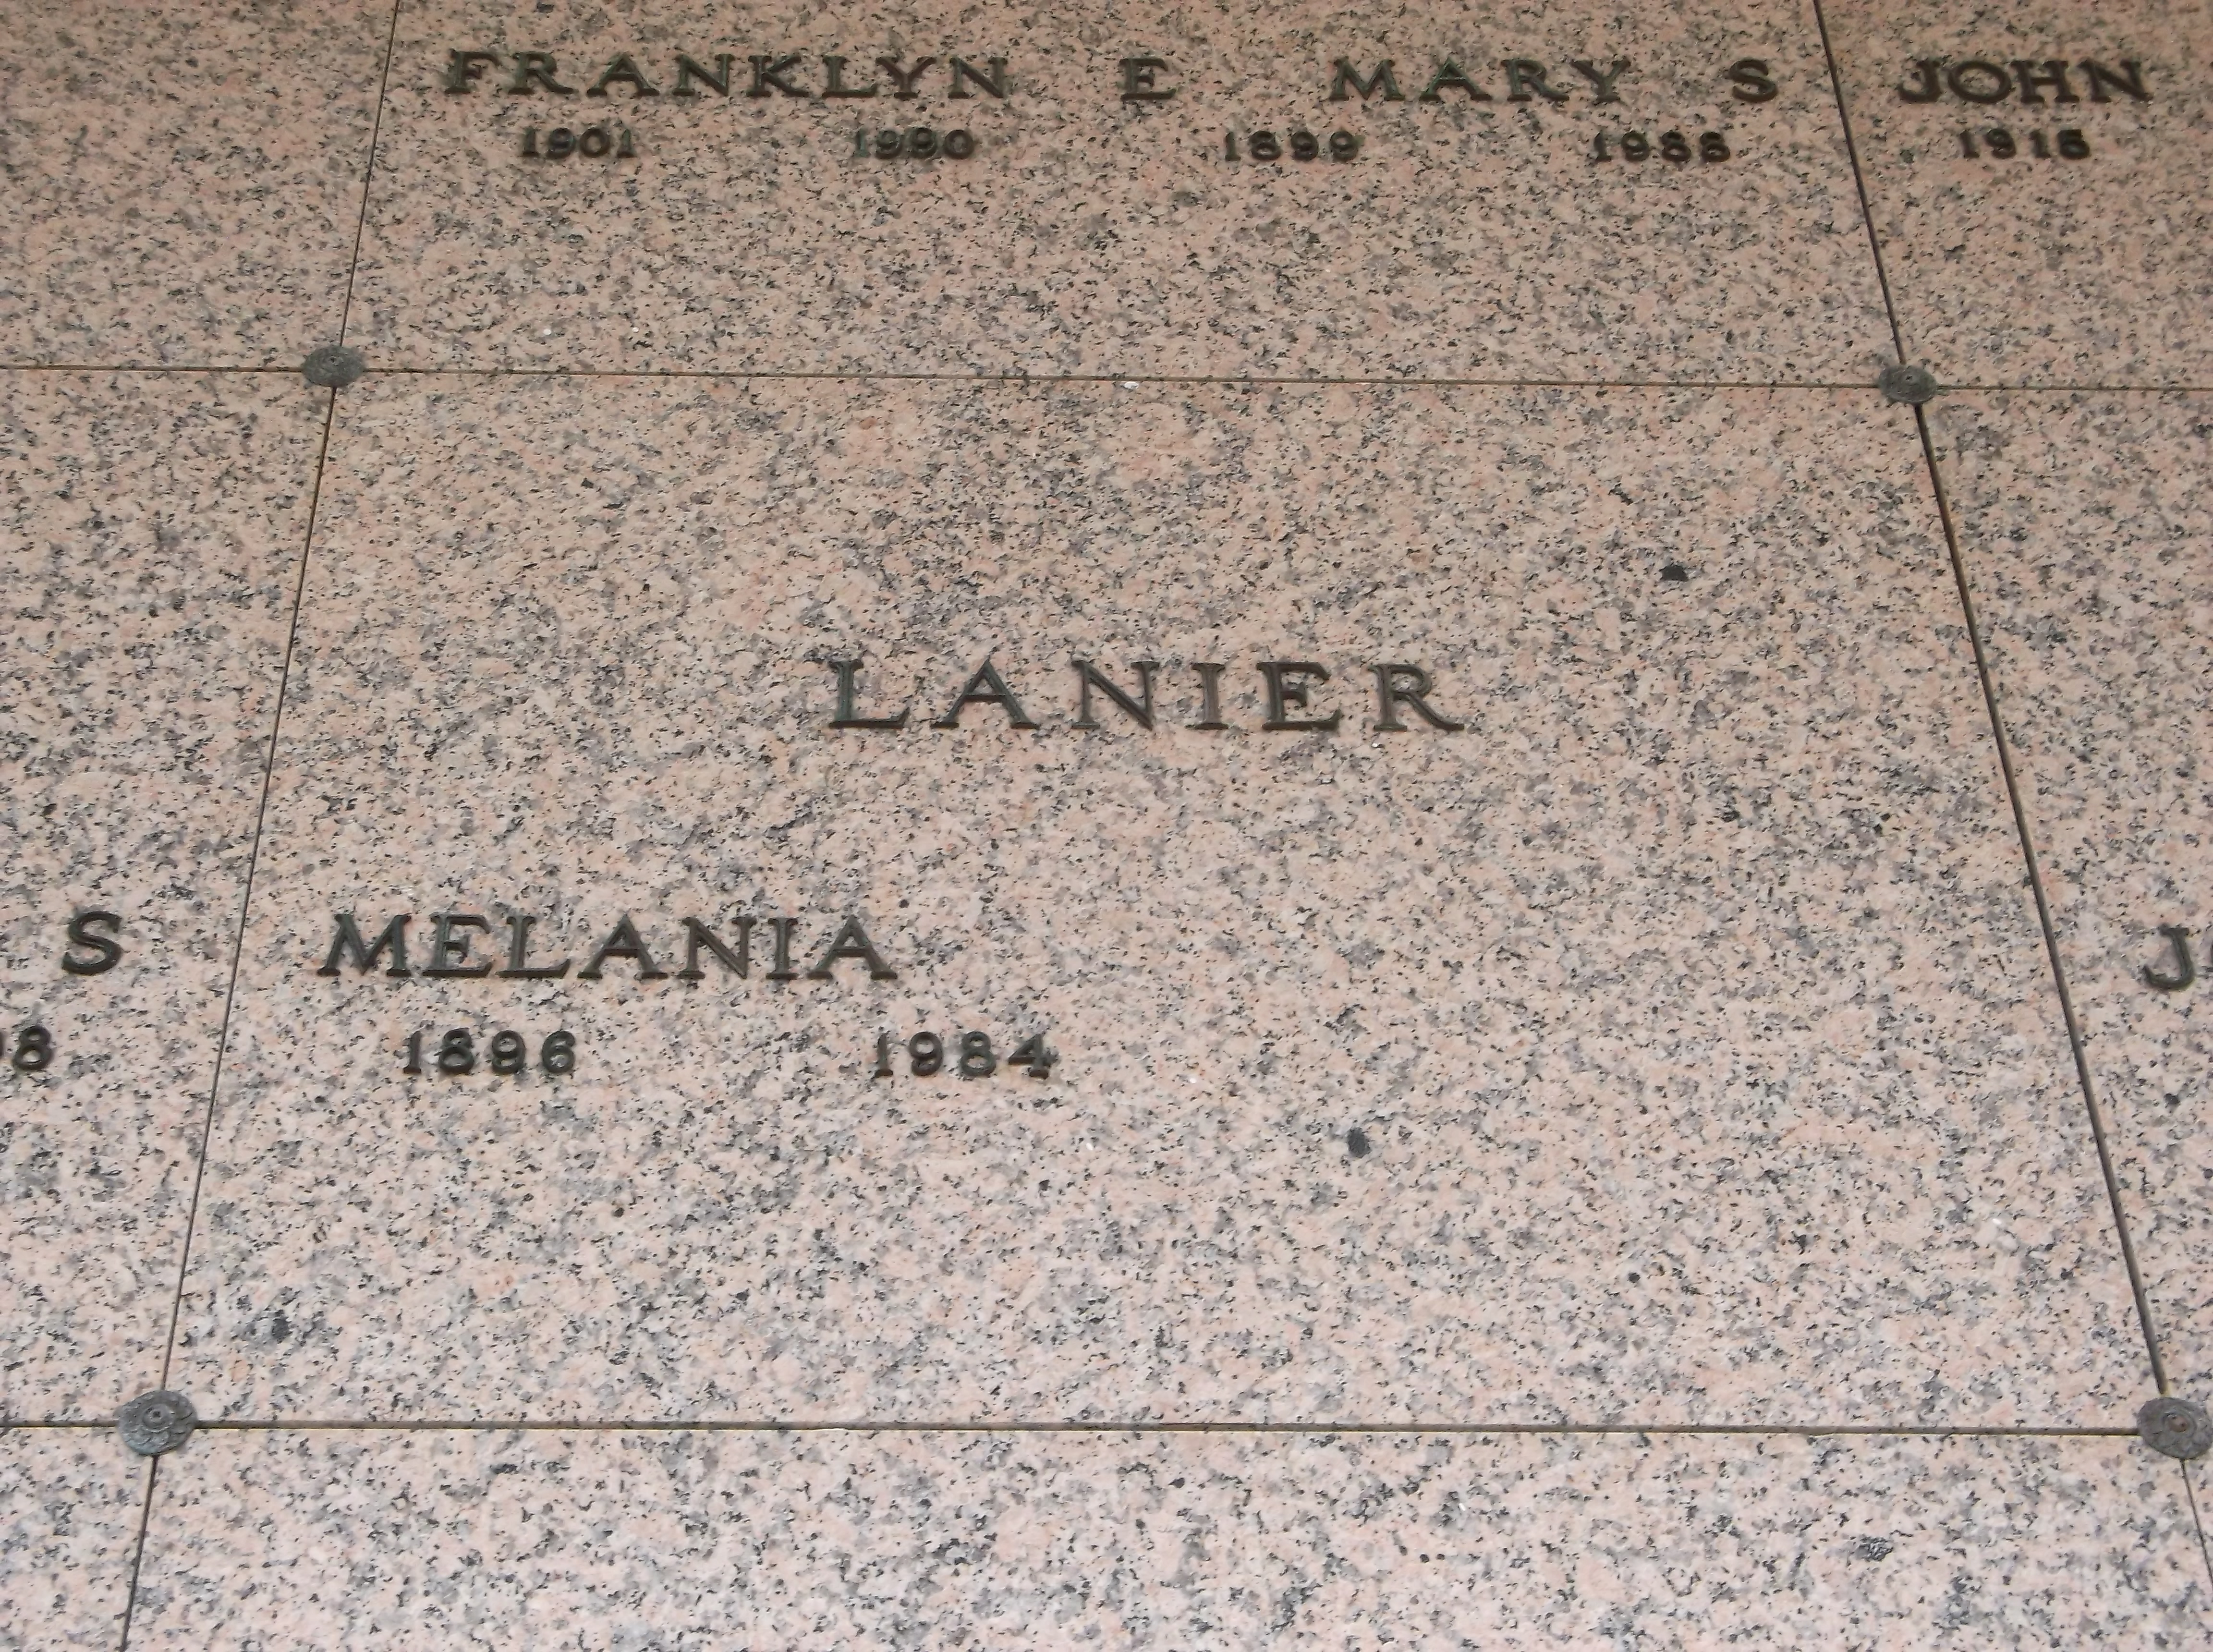 Melania Lanier